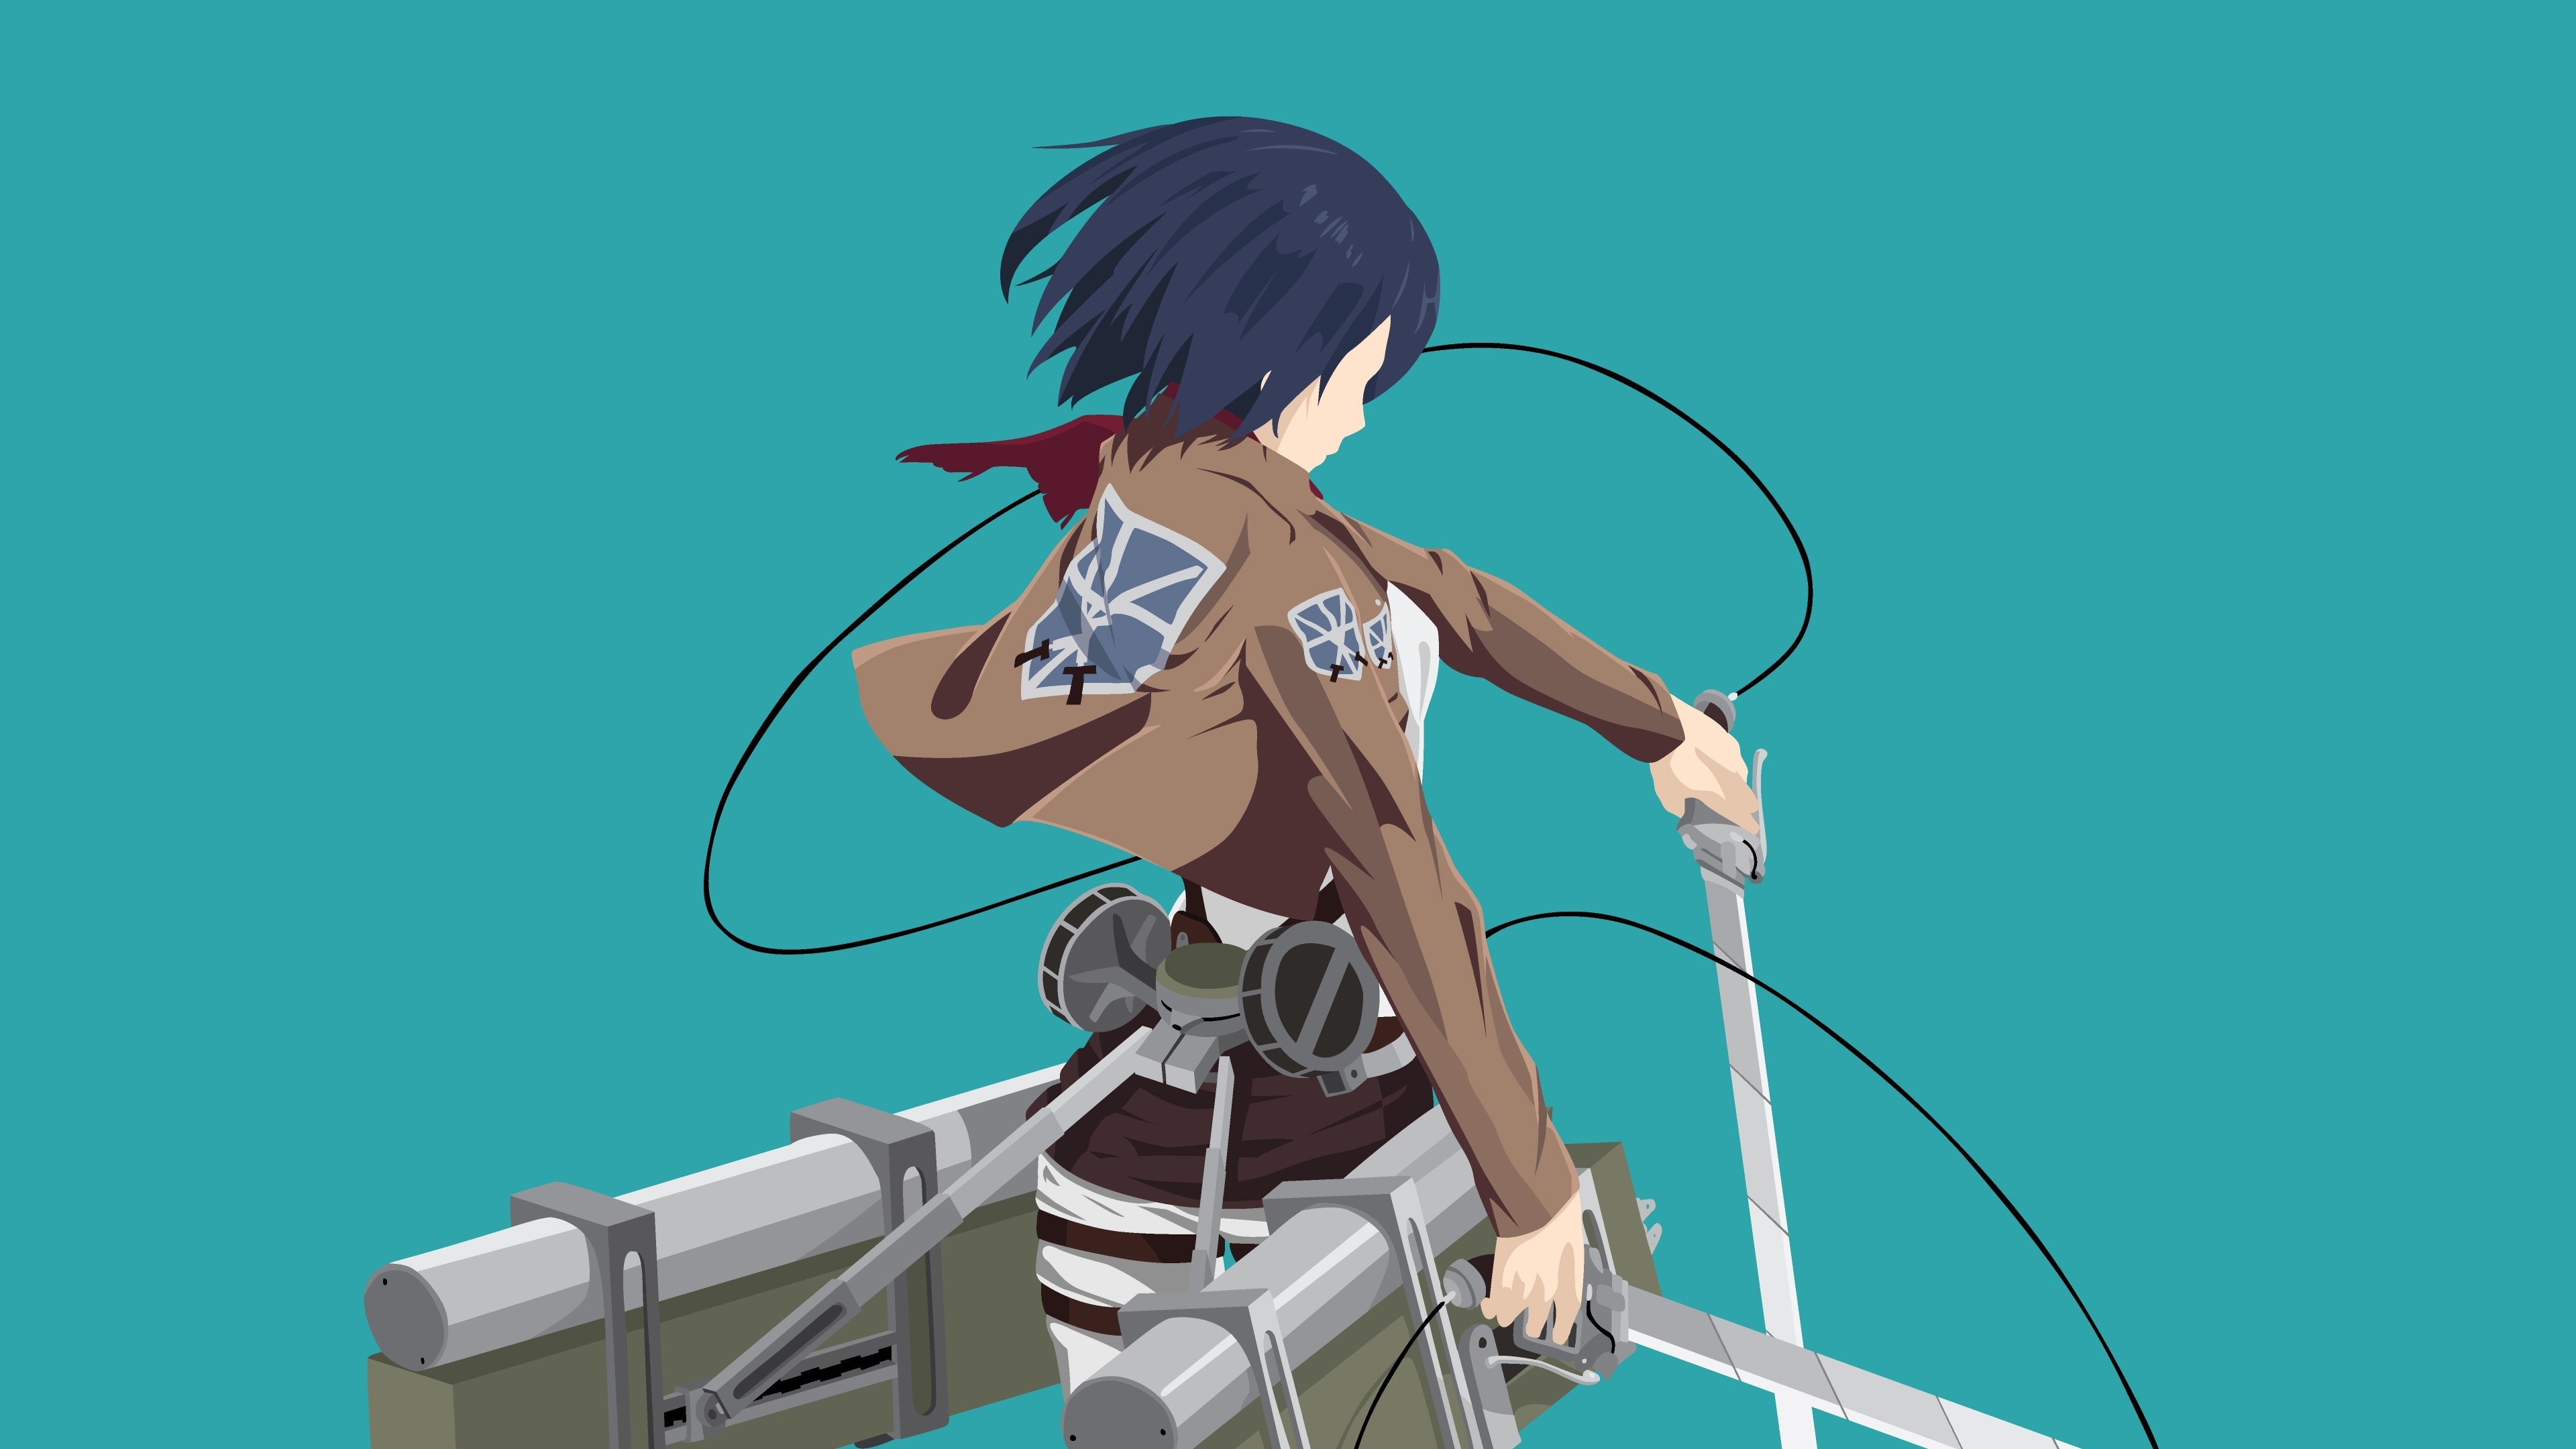 Download 3840x2160 Wallpaper Anime Girl Mikasa Ackerman Minimal 4k Uhd 16 9 Widescreen 3840x2160 Hd Image Background 4075